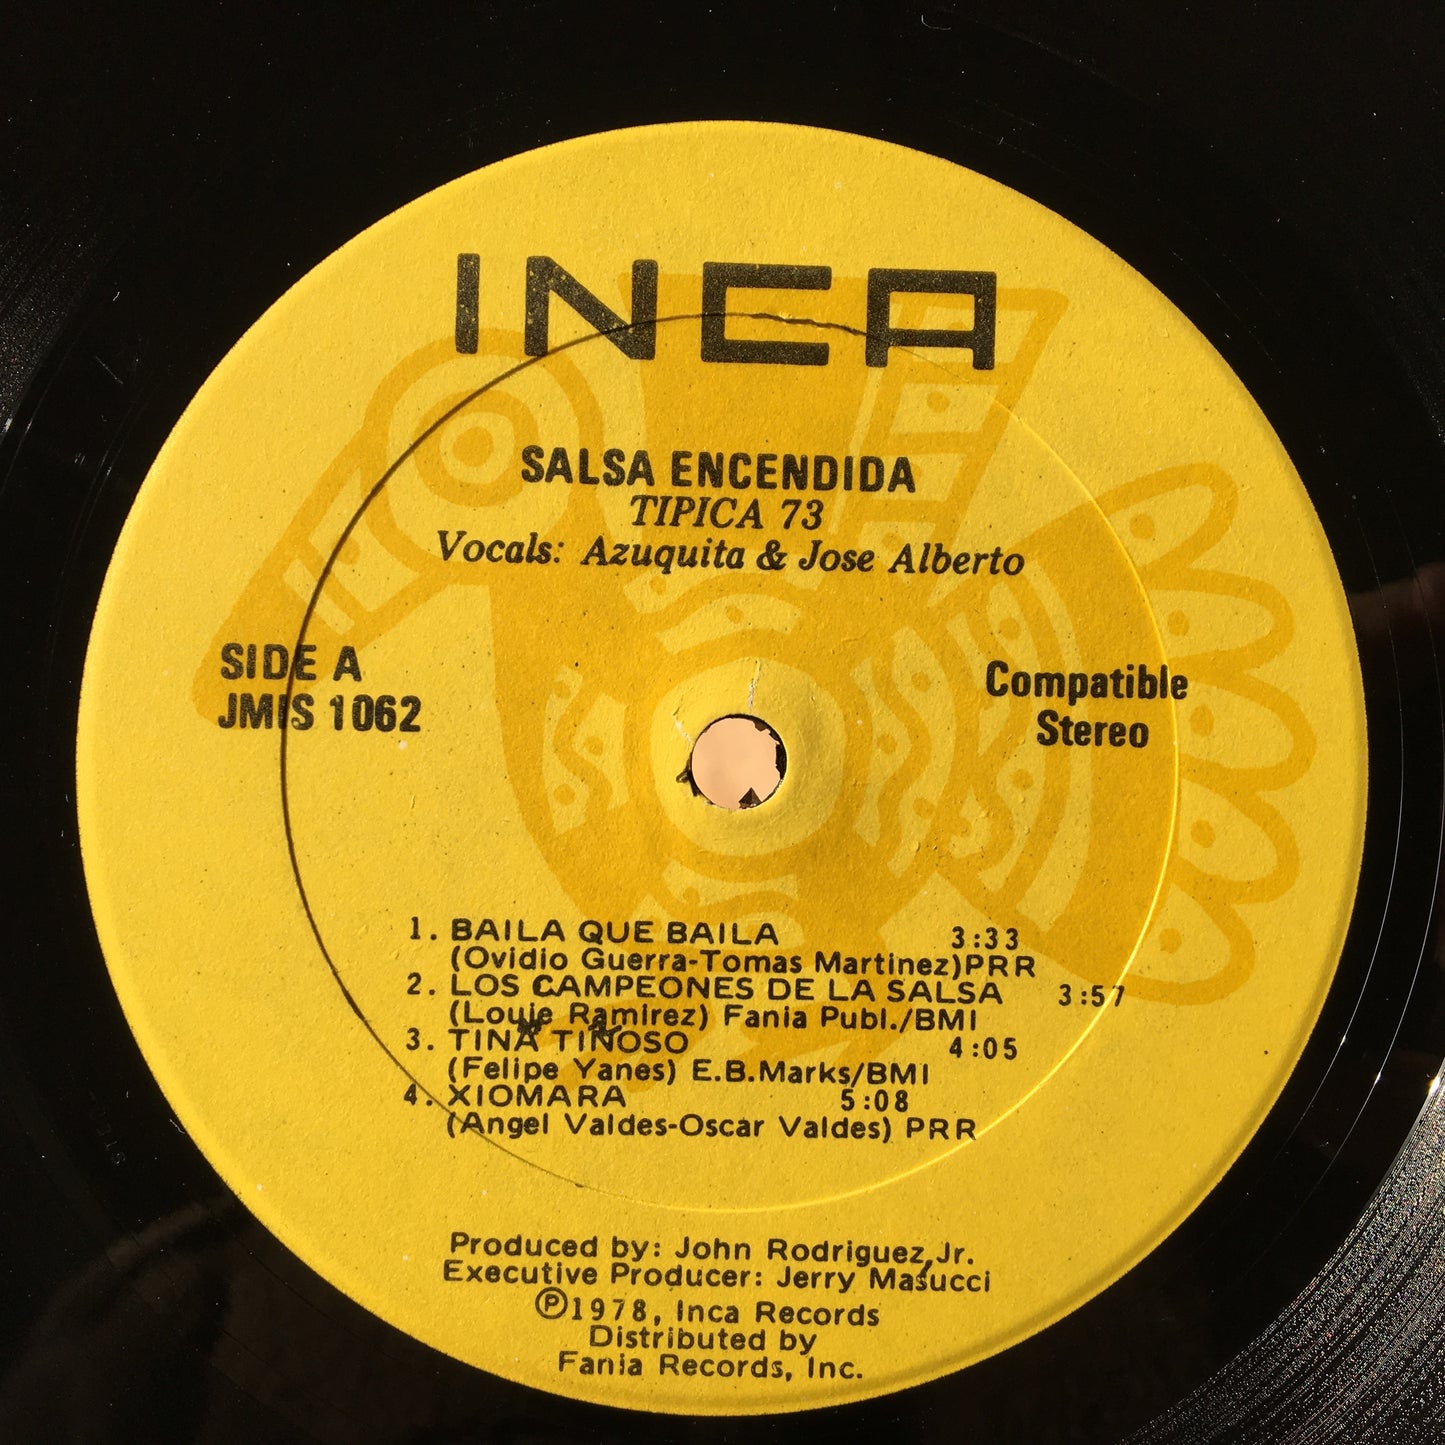 Tipica 73 – Salsa Encendida